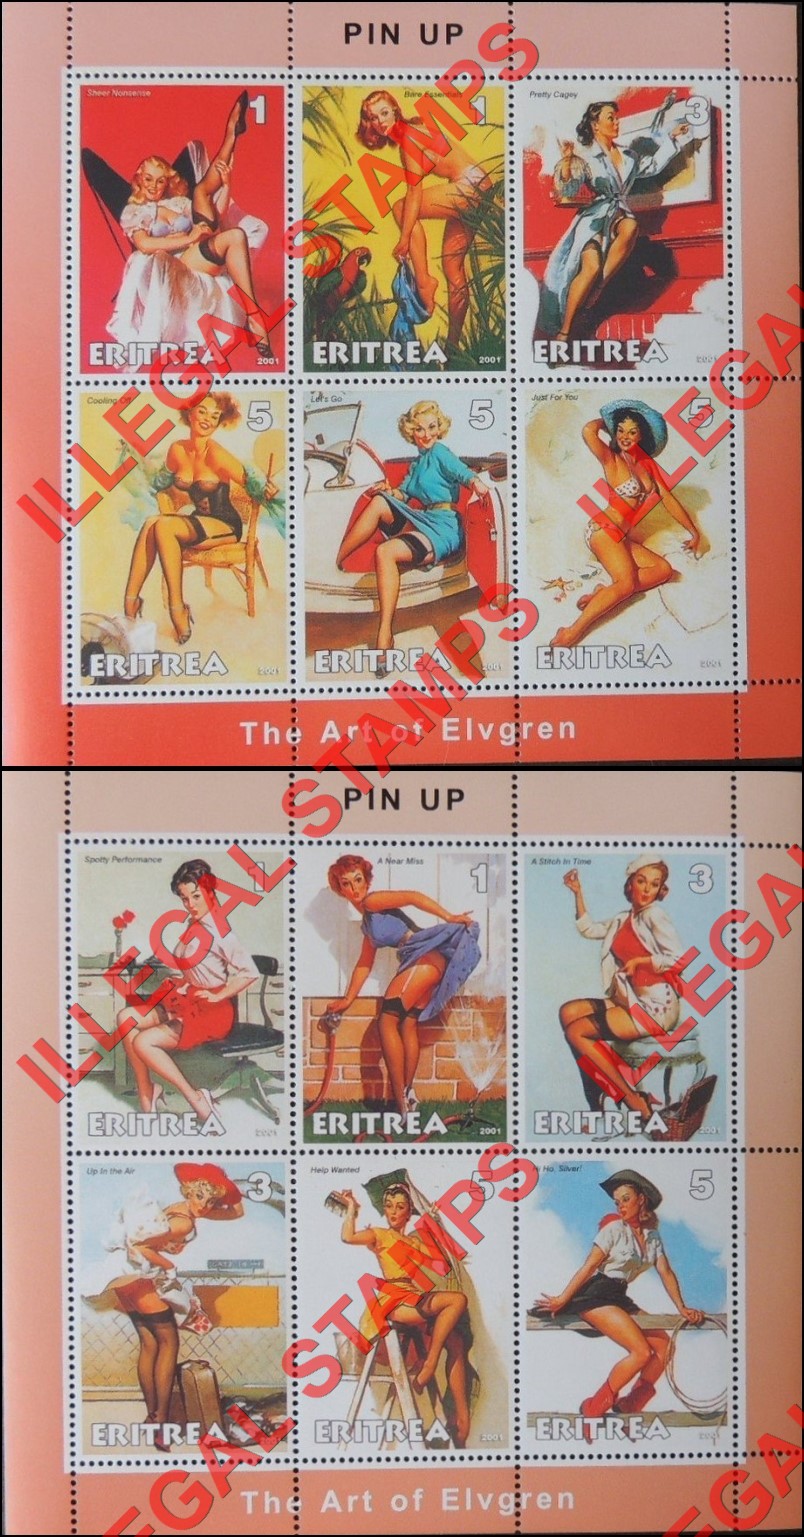 Eritrea 2001 Pin Up Art by Elvgren Counterfeit Illegal Stamp Souvenir Sheets of 6